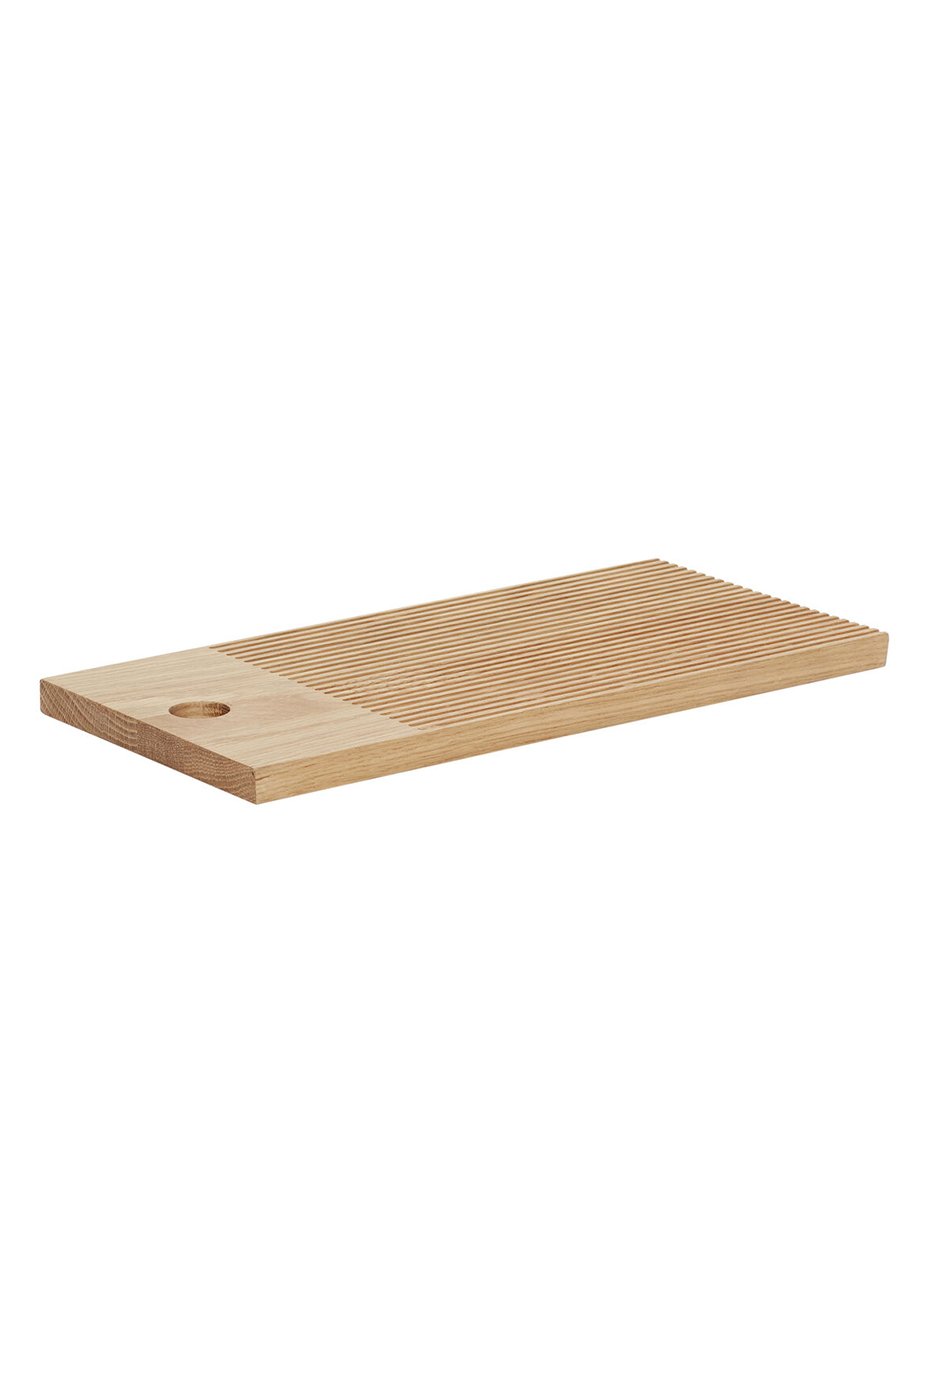 Hubsch Oak Cutting Board